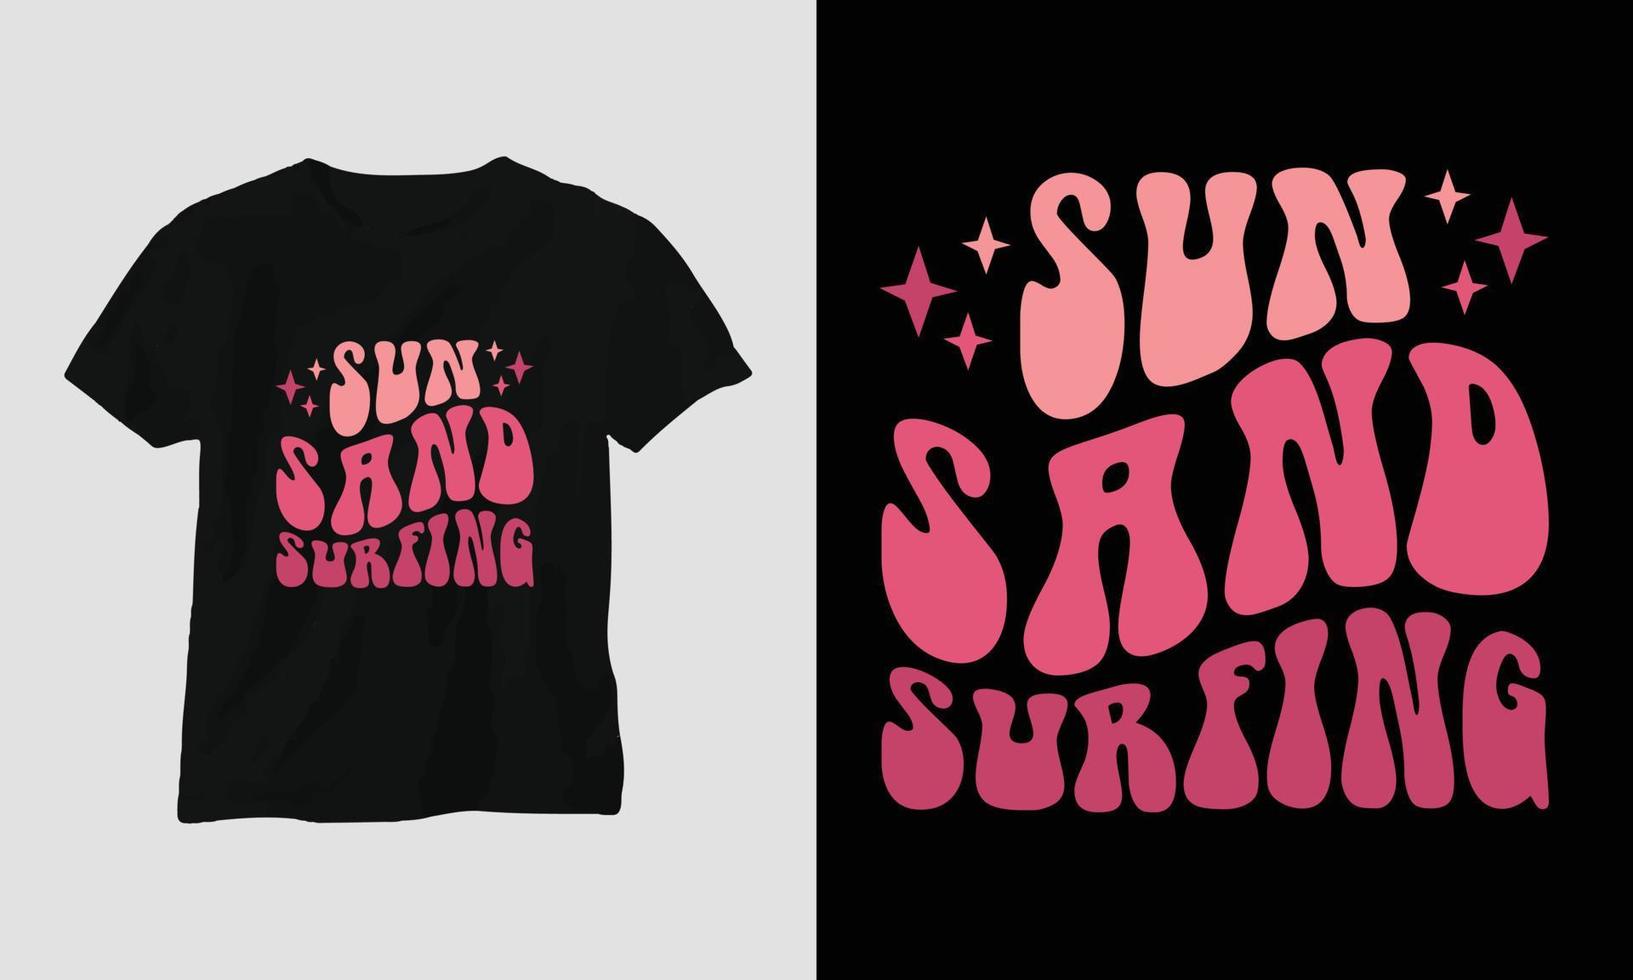 Sol sand surfing - surfing häftig t-shirt design retro stil vektor